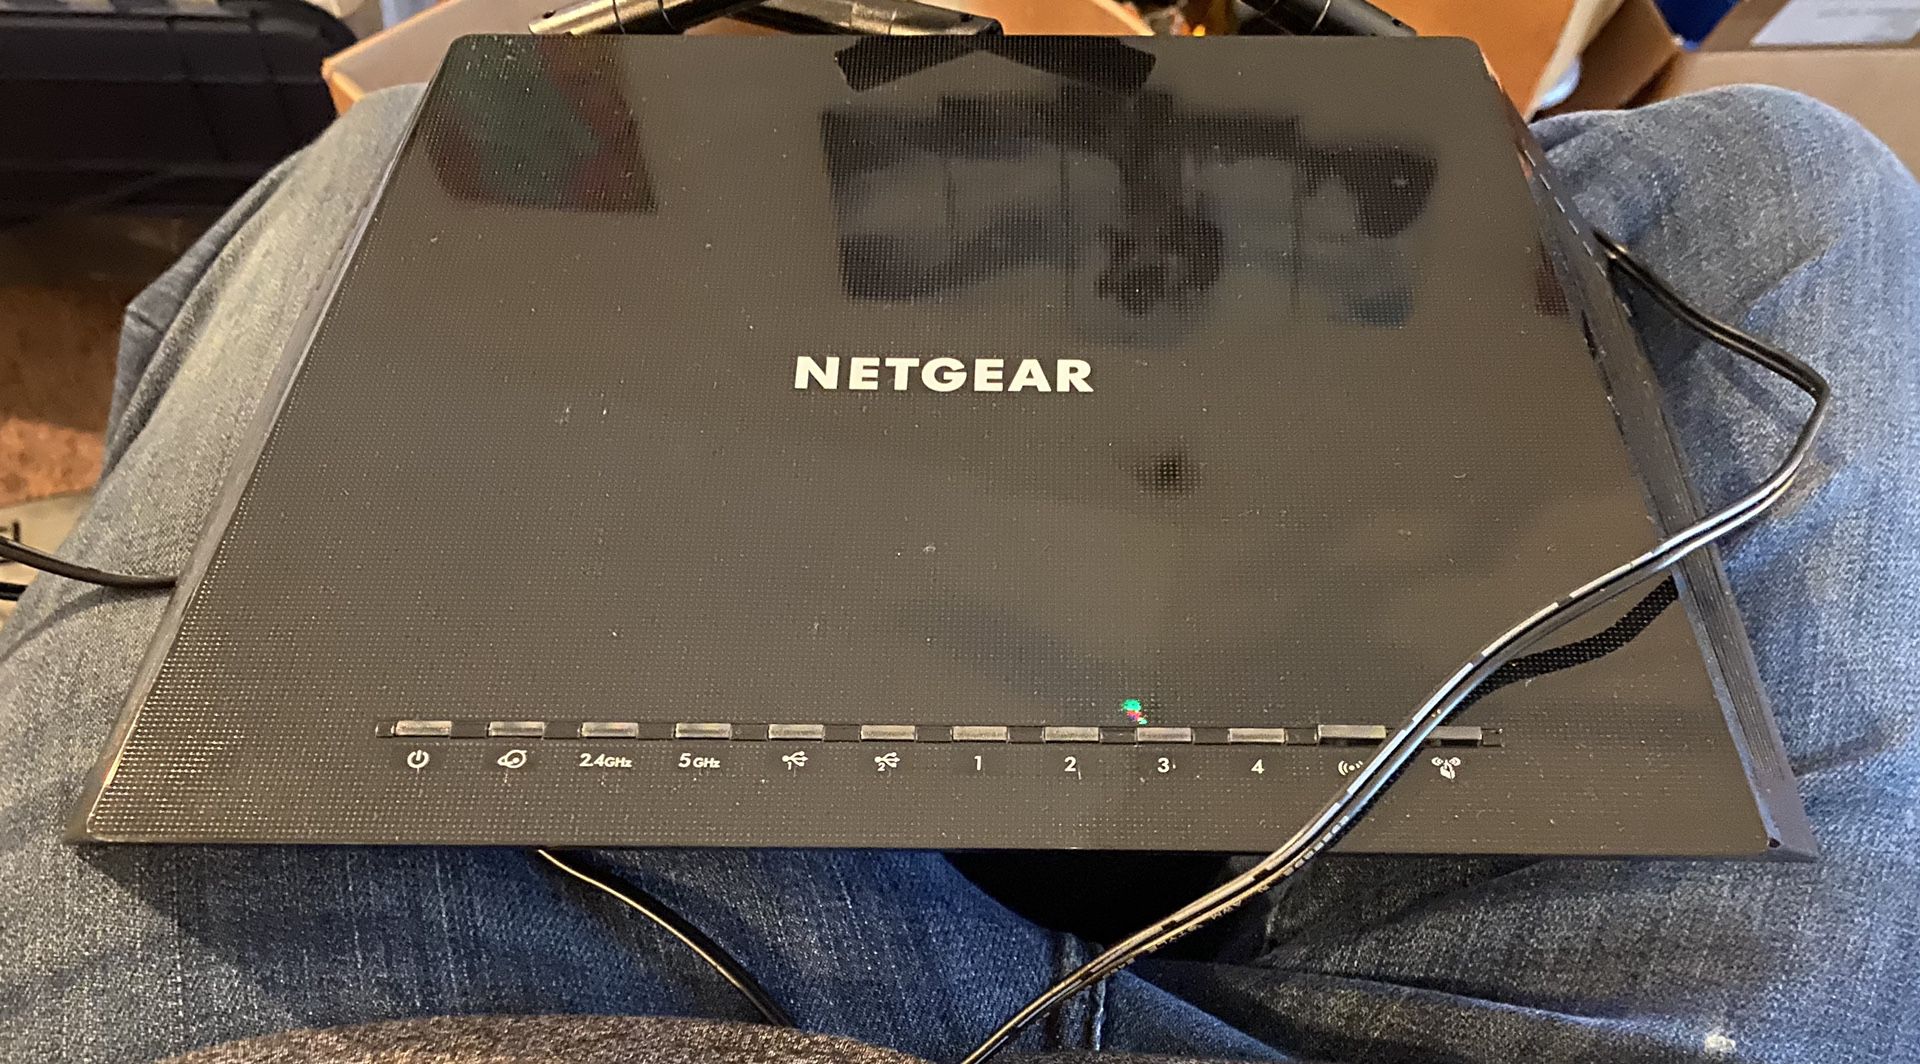 NETGEAR AC1750 R6400v2 WiFi Router